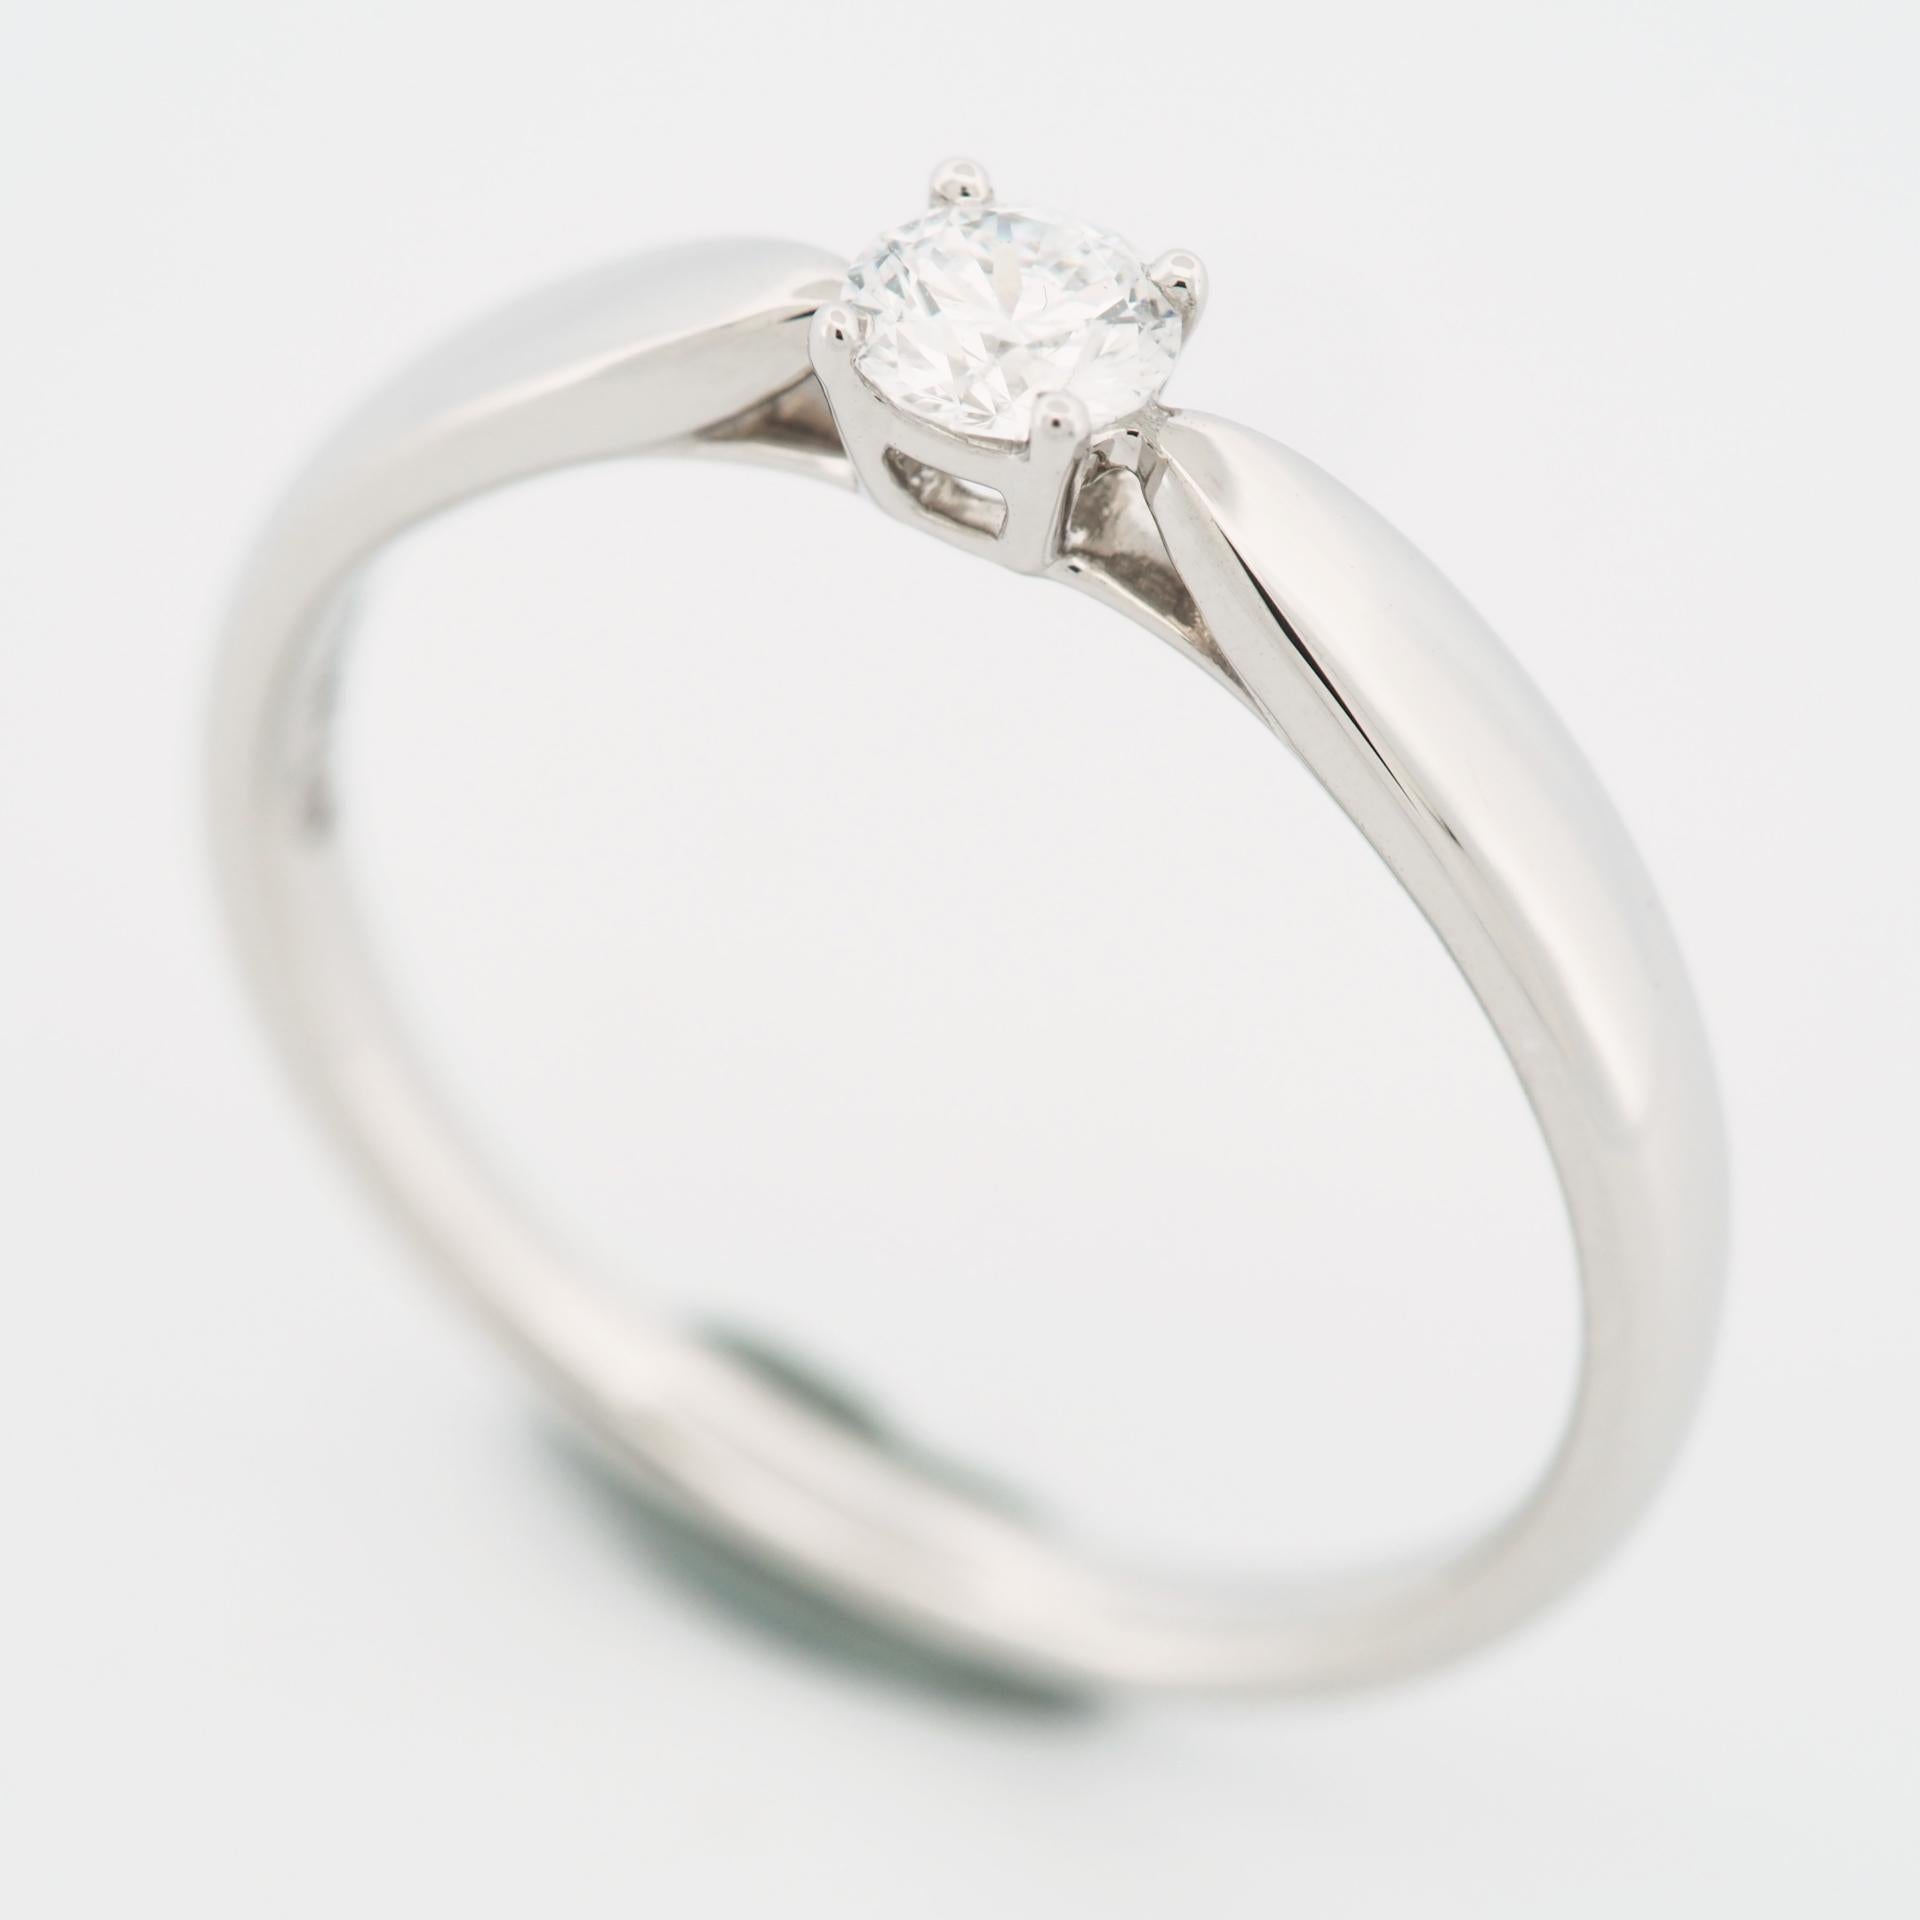 Item: Tiffany Harmony Solitaire Diamond Ring 
Stones: Diamond / 0.20ct
Color: D
Clarity: VVS2
Polish: Excellent
Symmetry: Excellent
Fluorescence: None
Metal: Platinum 950
Ring Size: US SIZE 5.75-6.0 UK SIZE L
Internal Diameter: 16.50